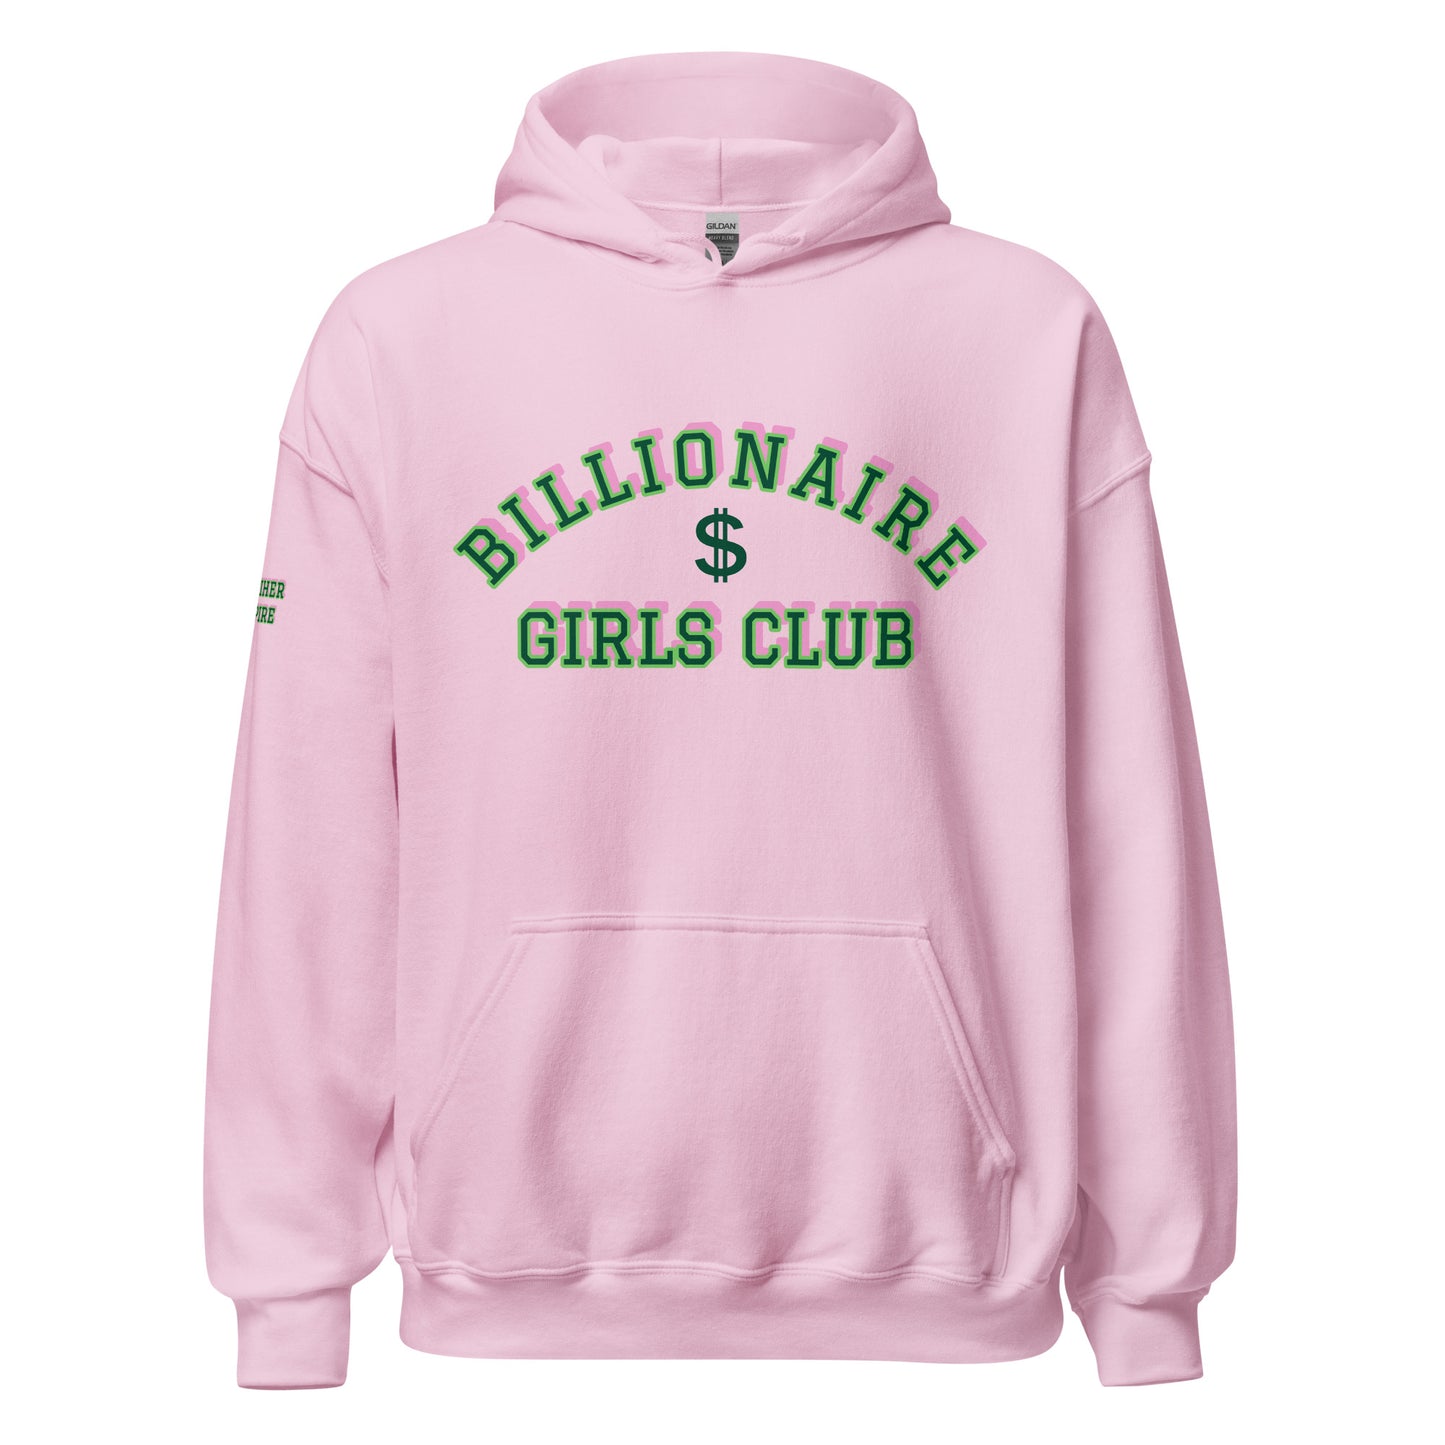 Billionaire Girls Club Hoodie